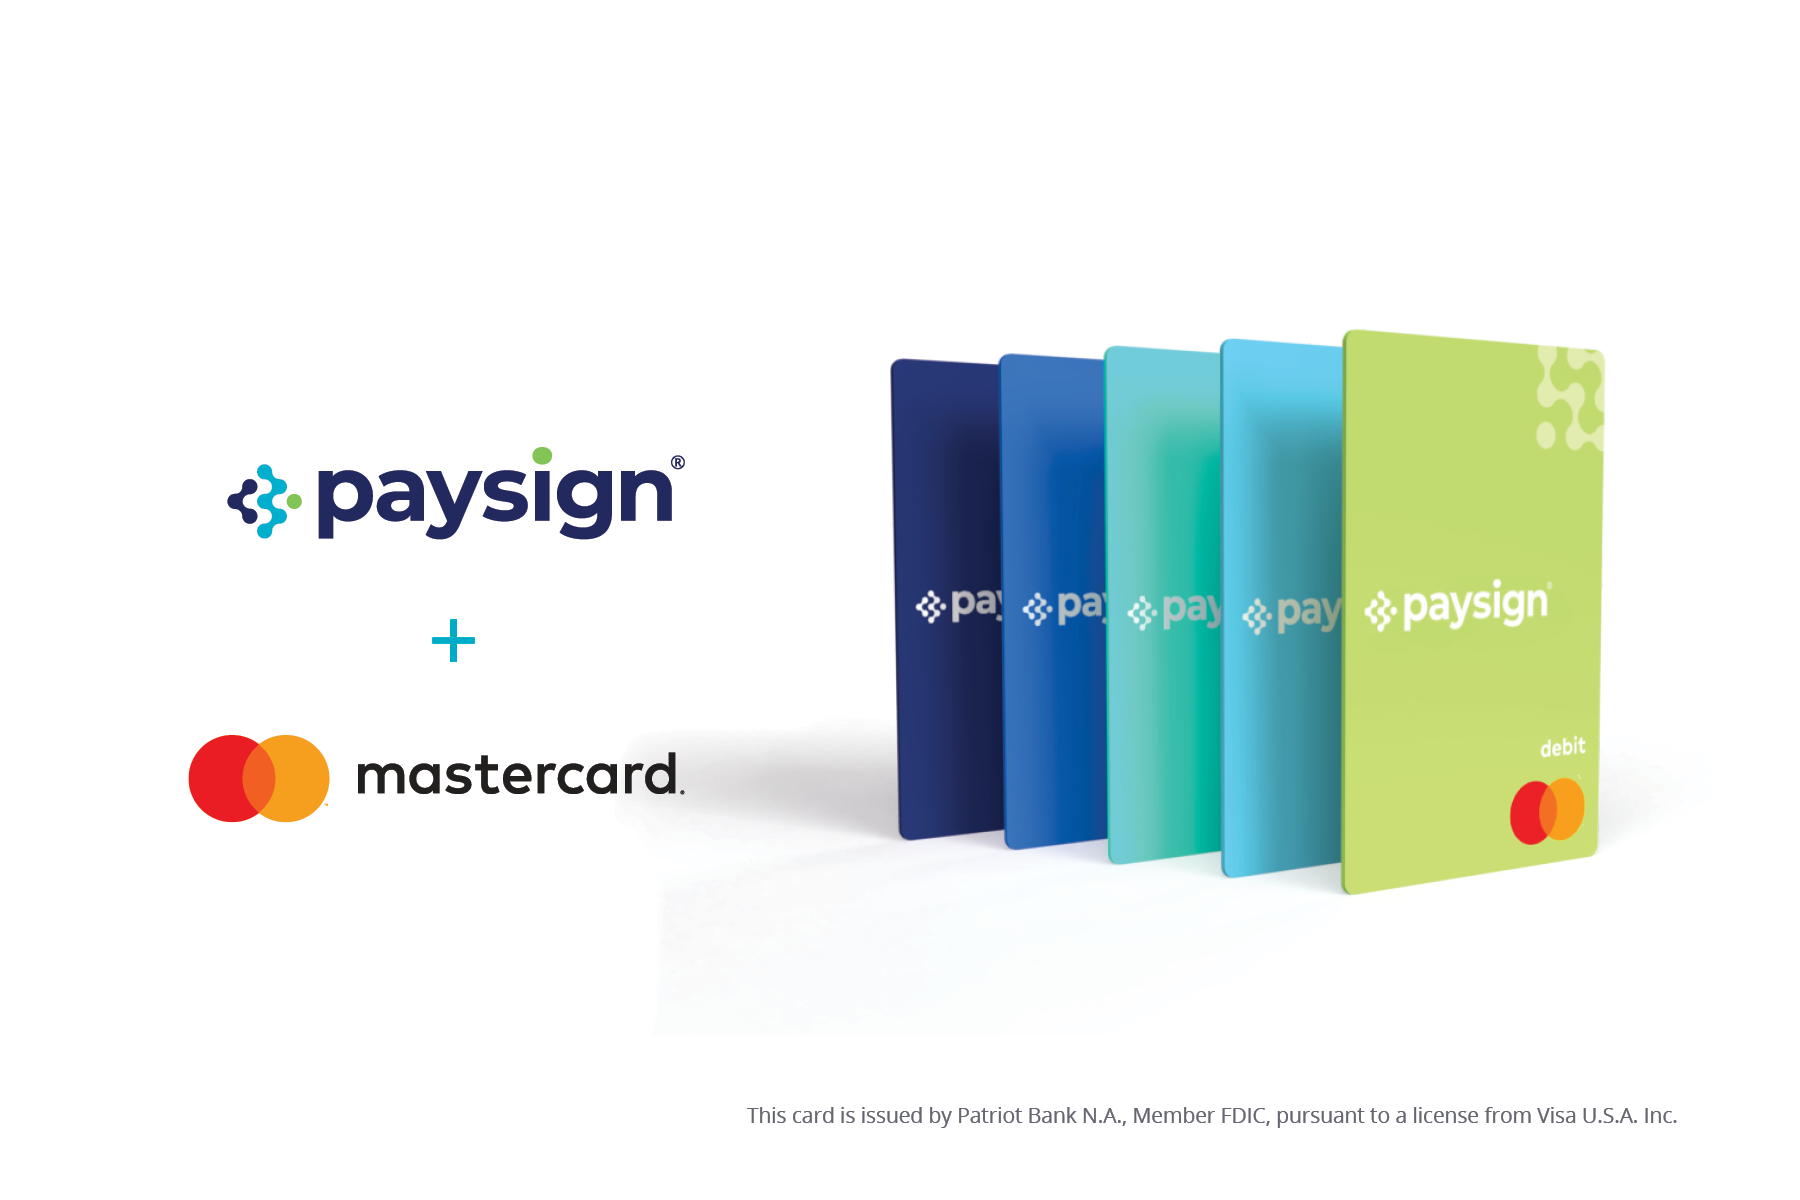 Paysign Mastercard Partnership